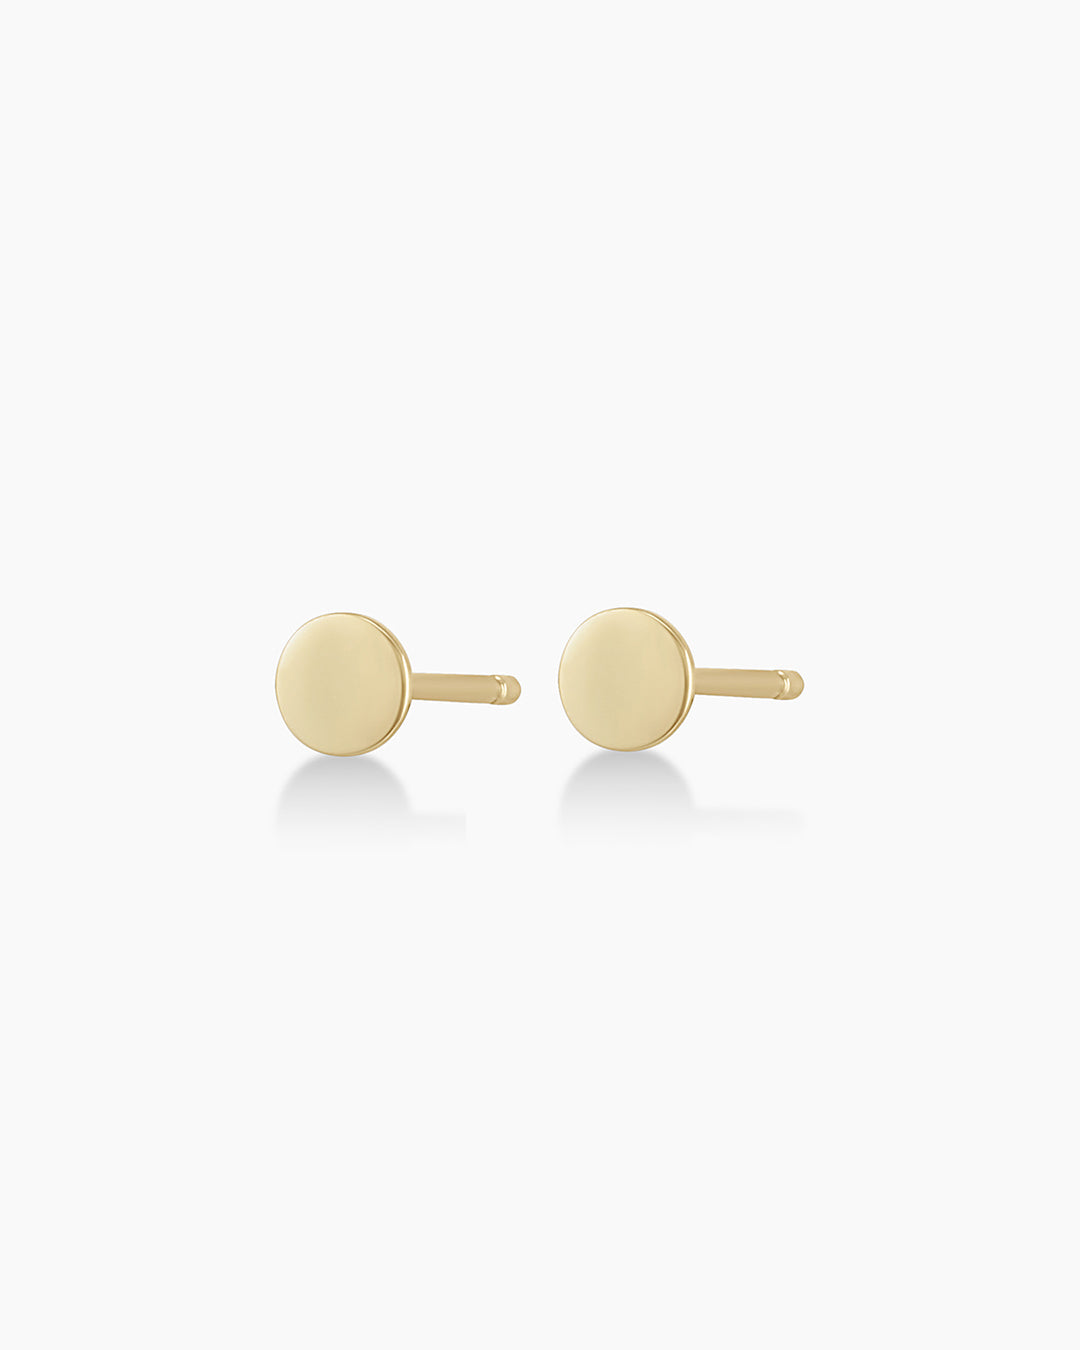 Alphabet Studs Earring in O K Solid Gold/Pair, Women's by Gorjana